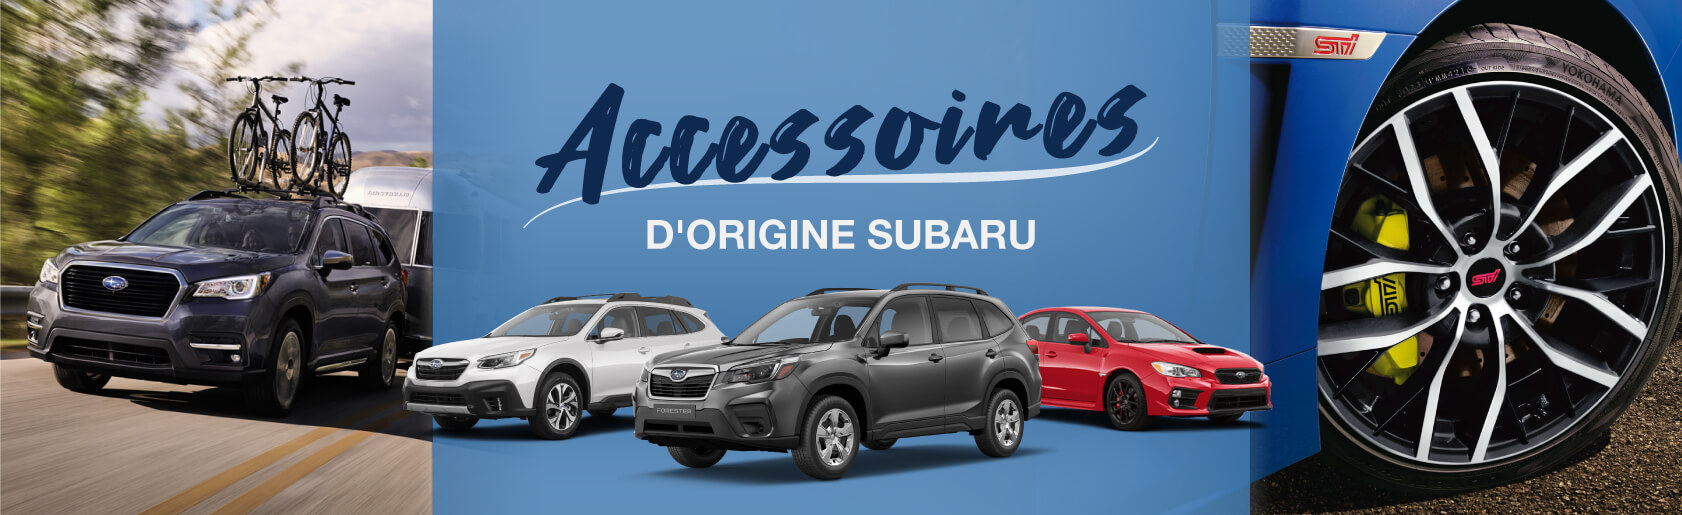 Les accessoires d'origine Subaru - Desjardins Subaru